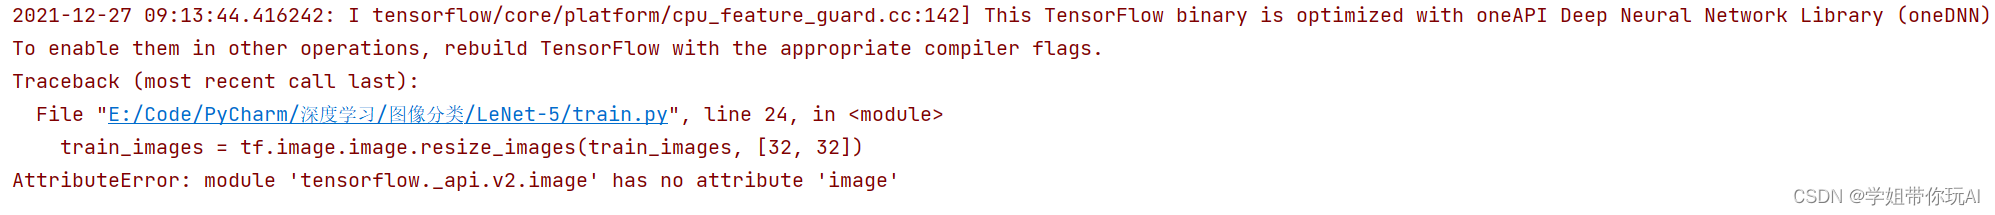 TensorFlow修改图像尺寸：AttributeError: module ‘tensorflow._api.v2.image‘ has no attribute ‘image‘